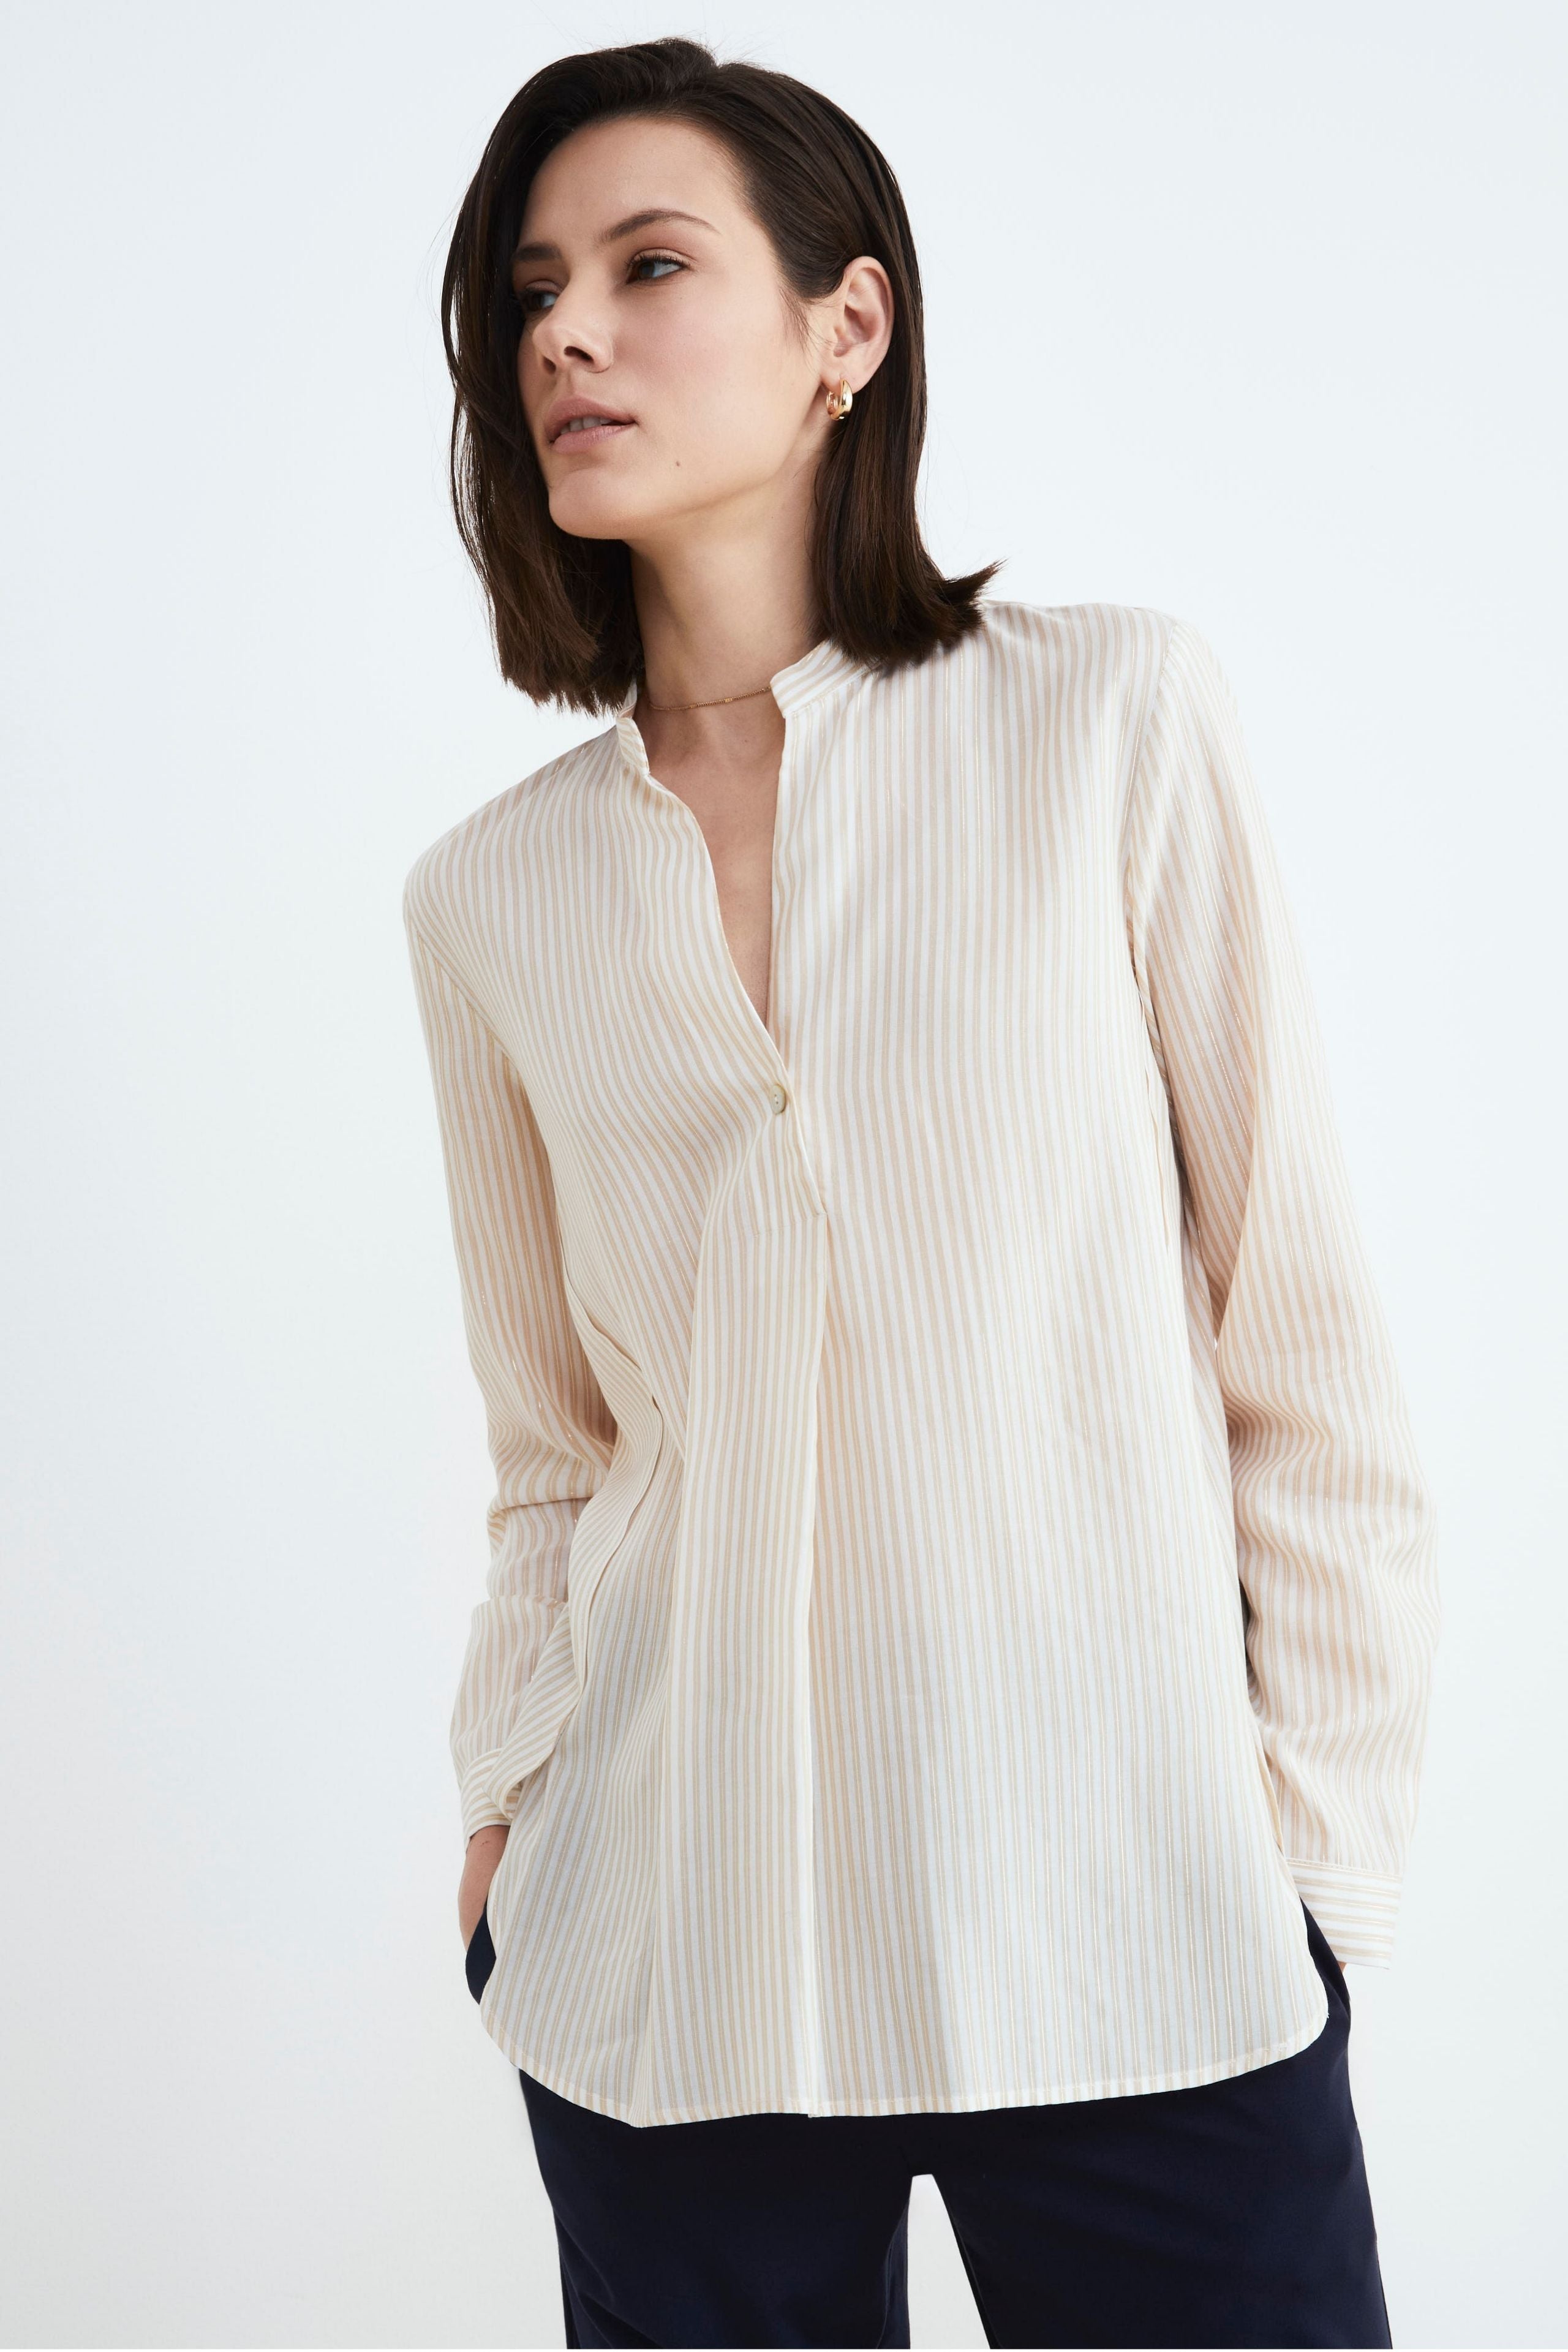 Women’s Korean collar shirt - White stripe